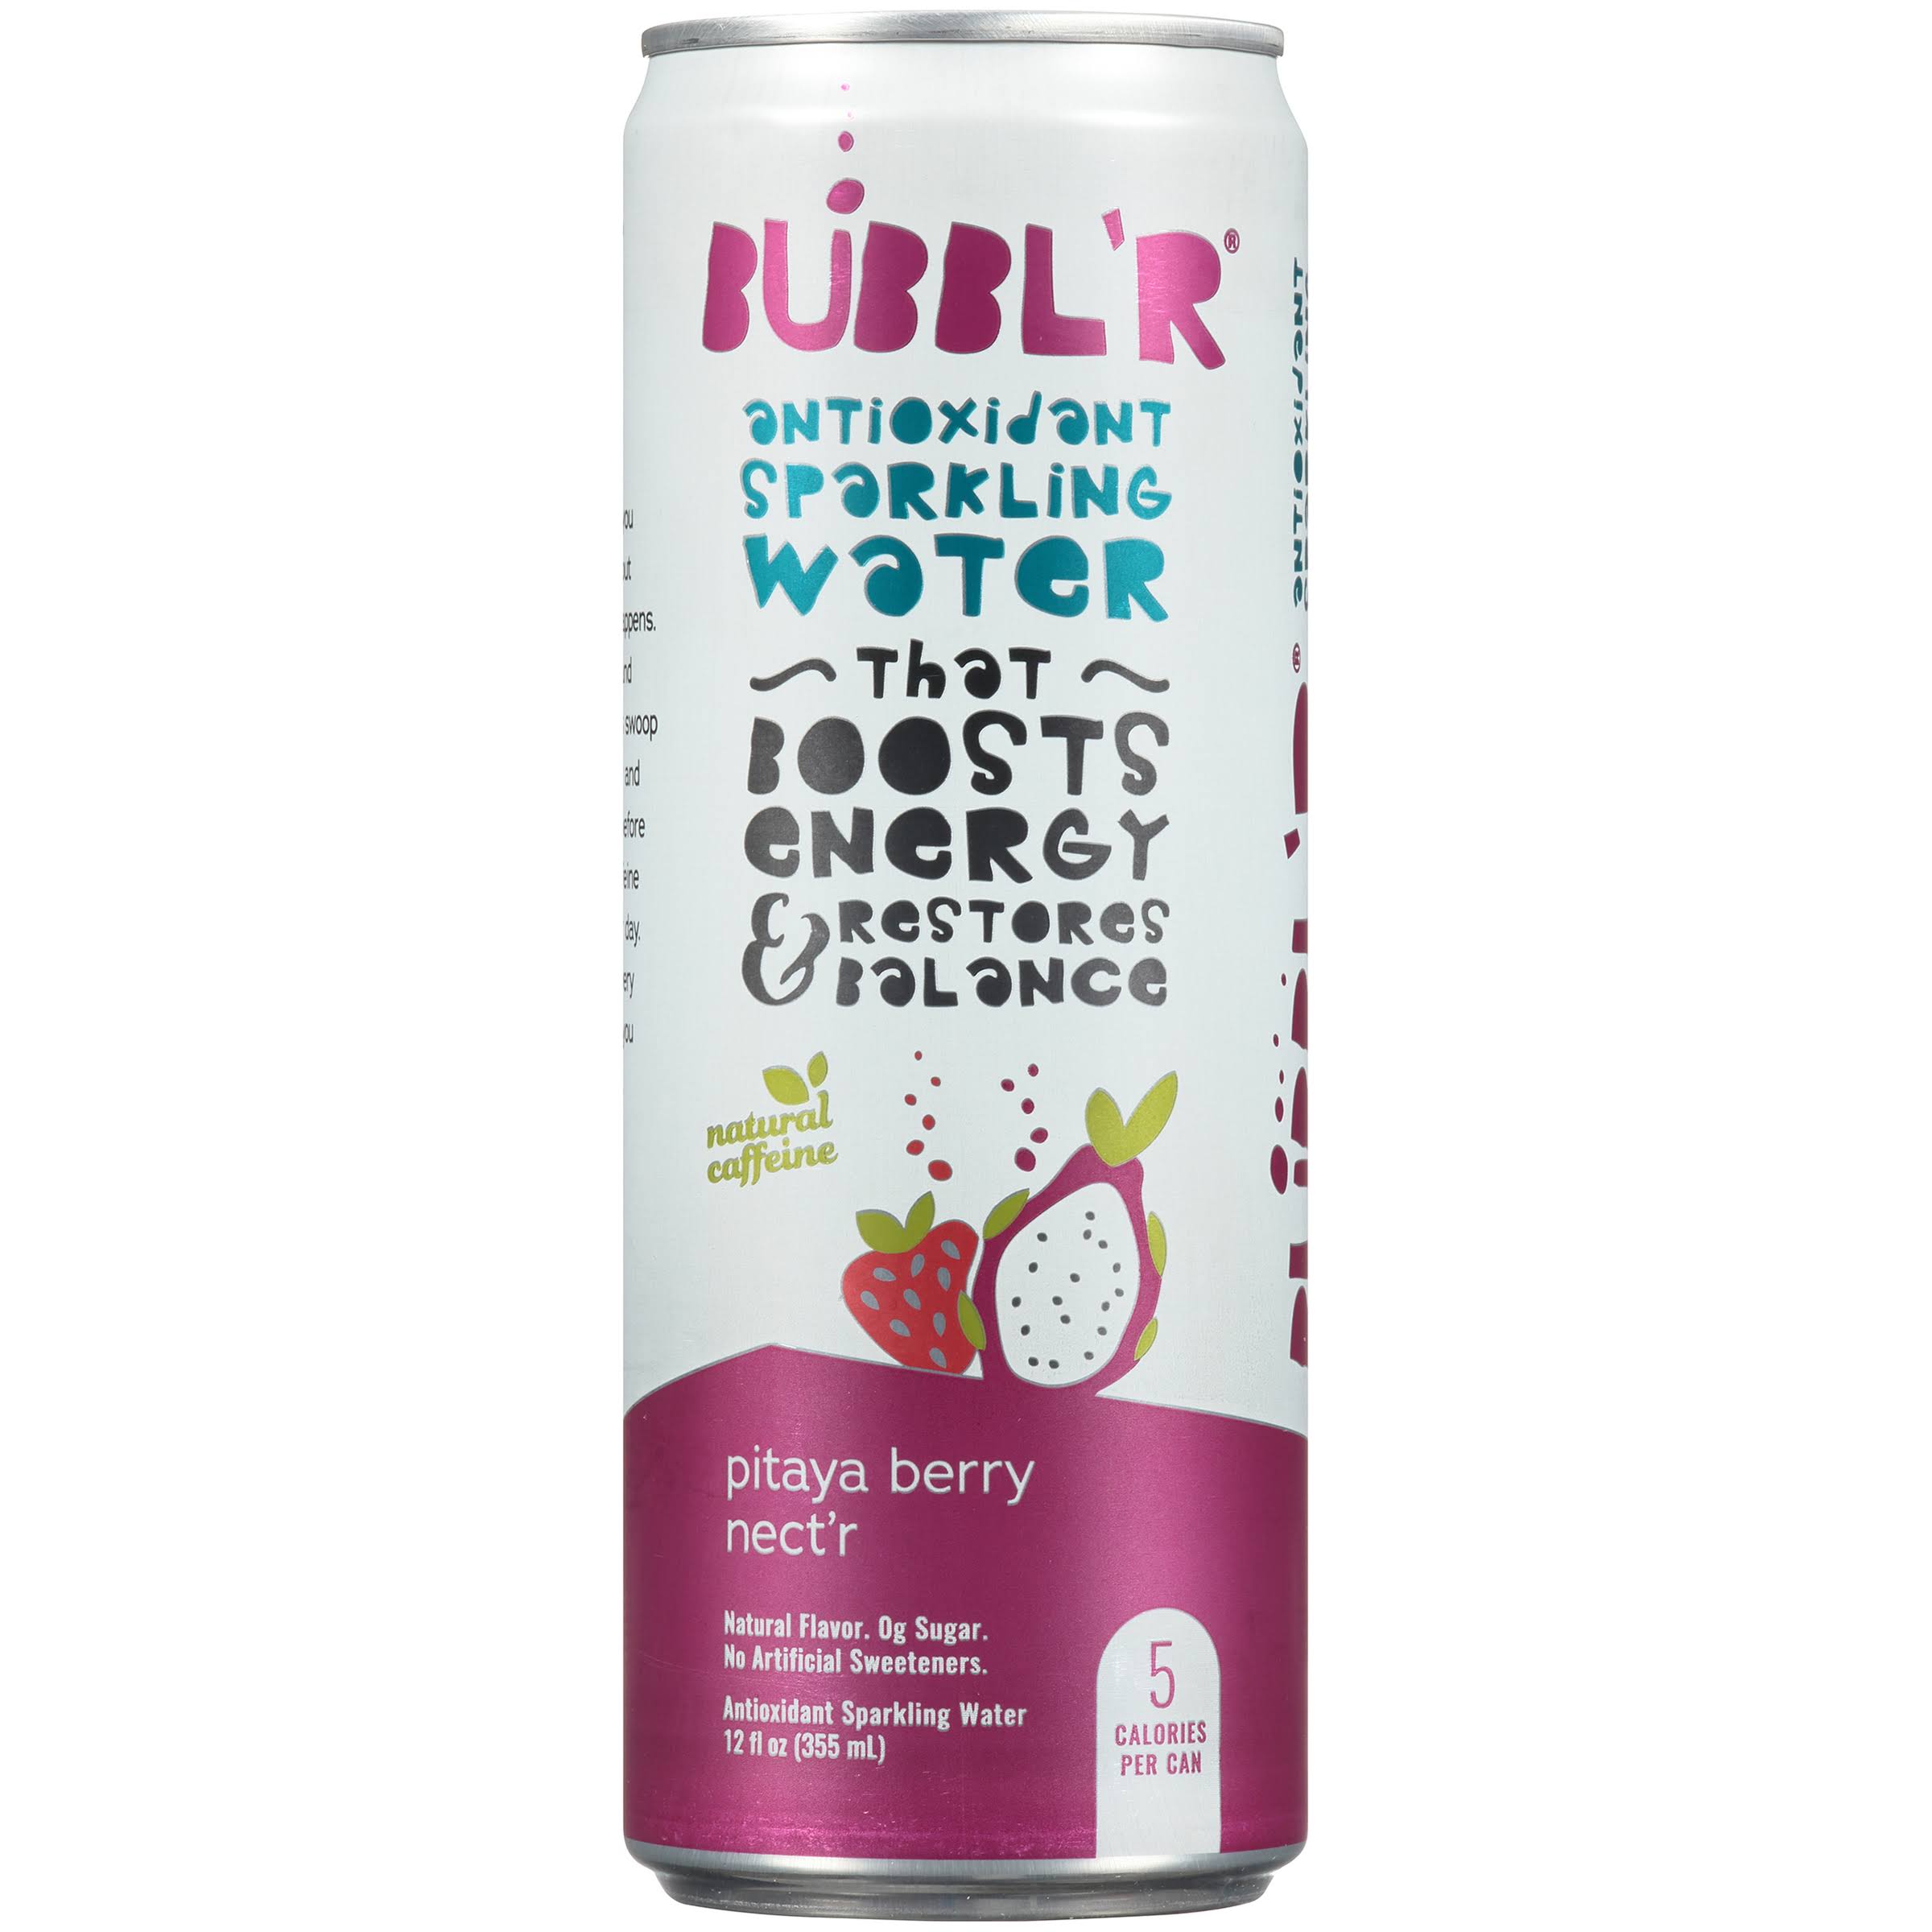 Bubblr Sparkling Water, Antioxidant, Pitaya Berry Nect’r - 12 fl oz